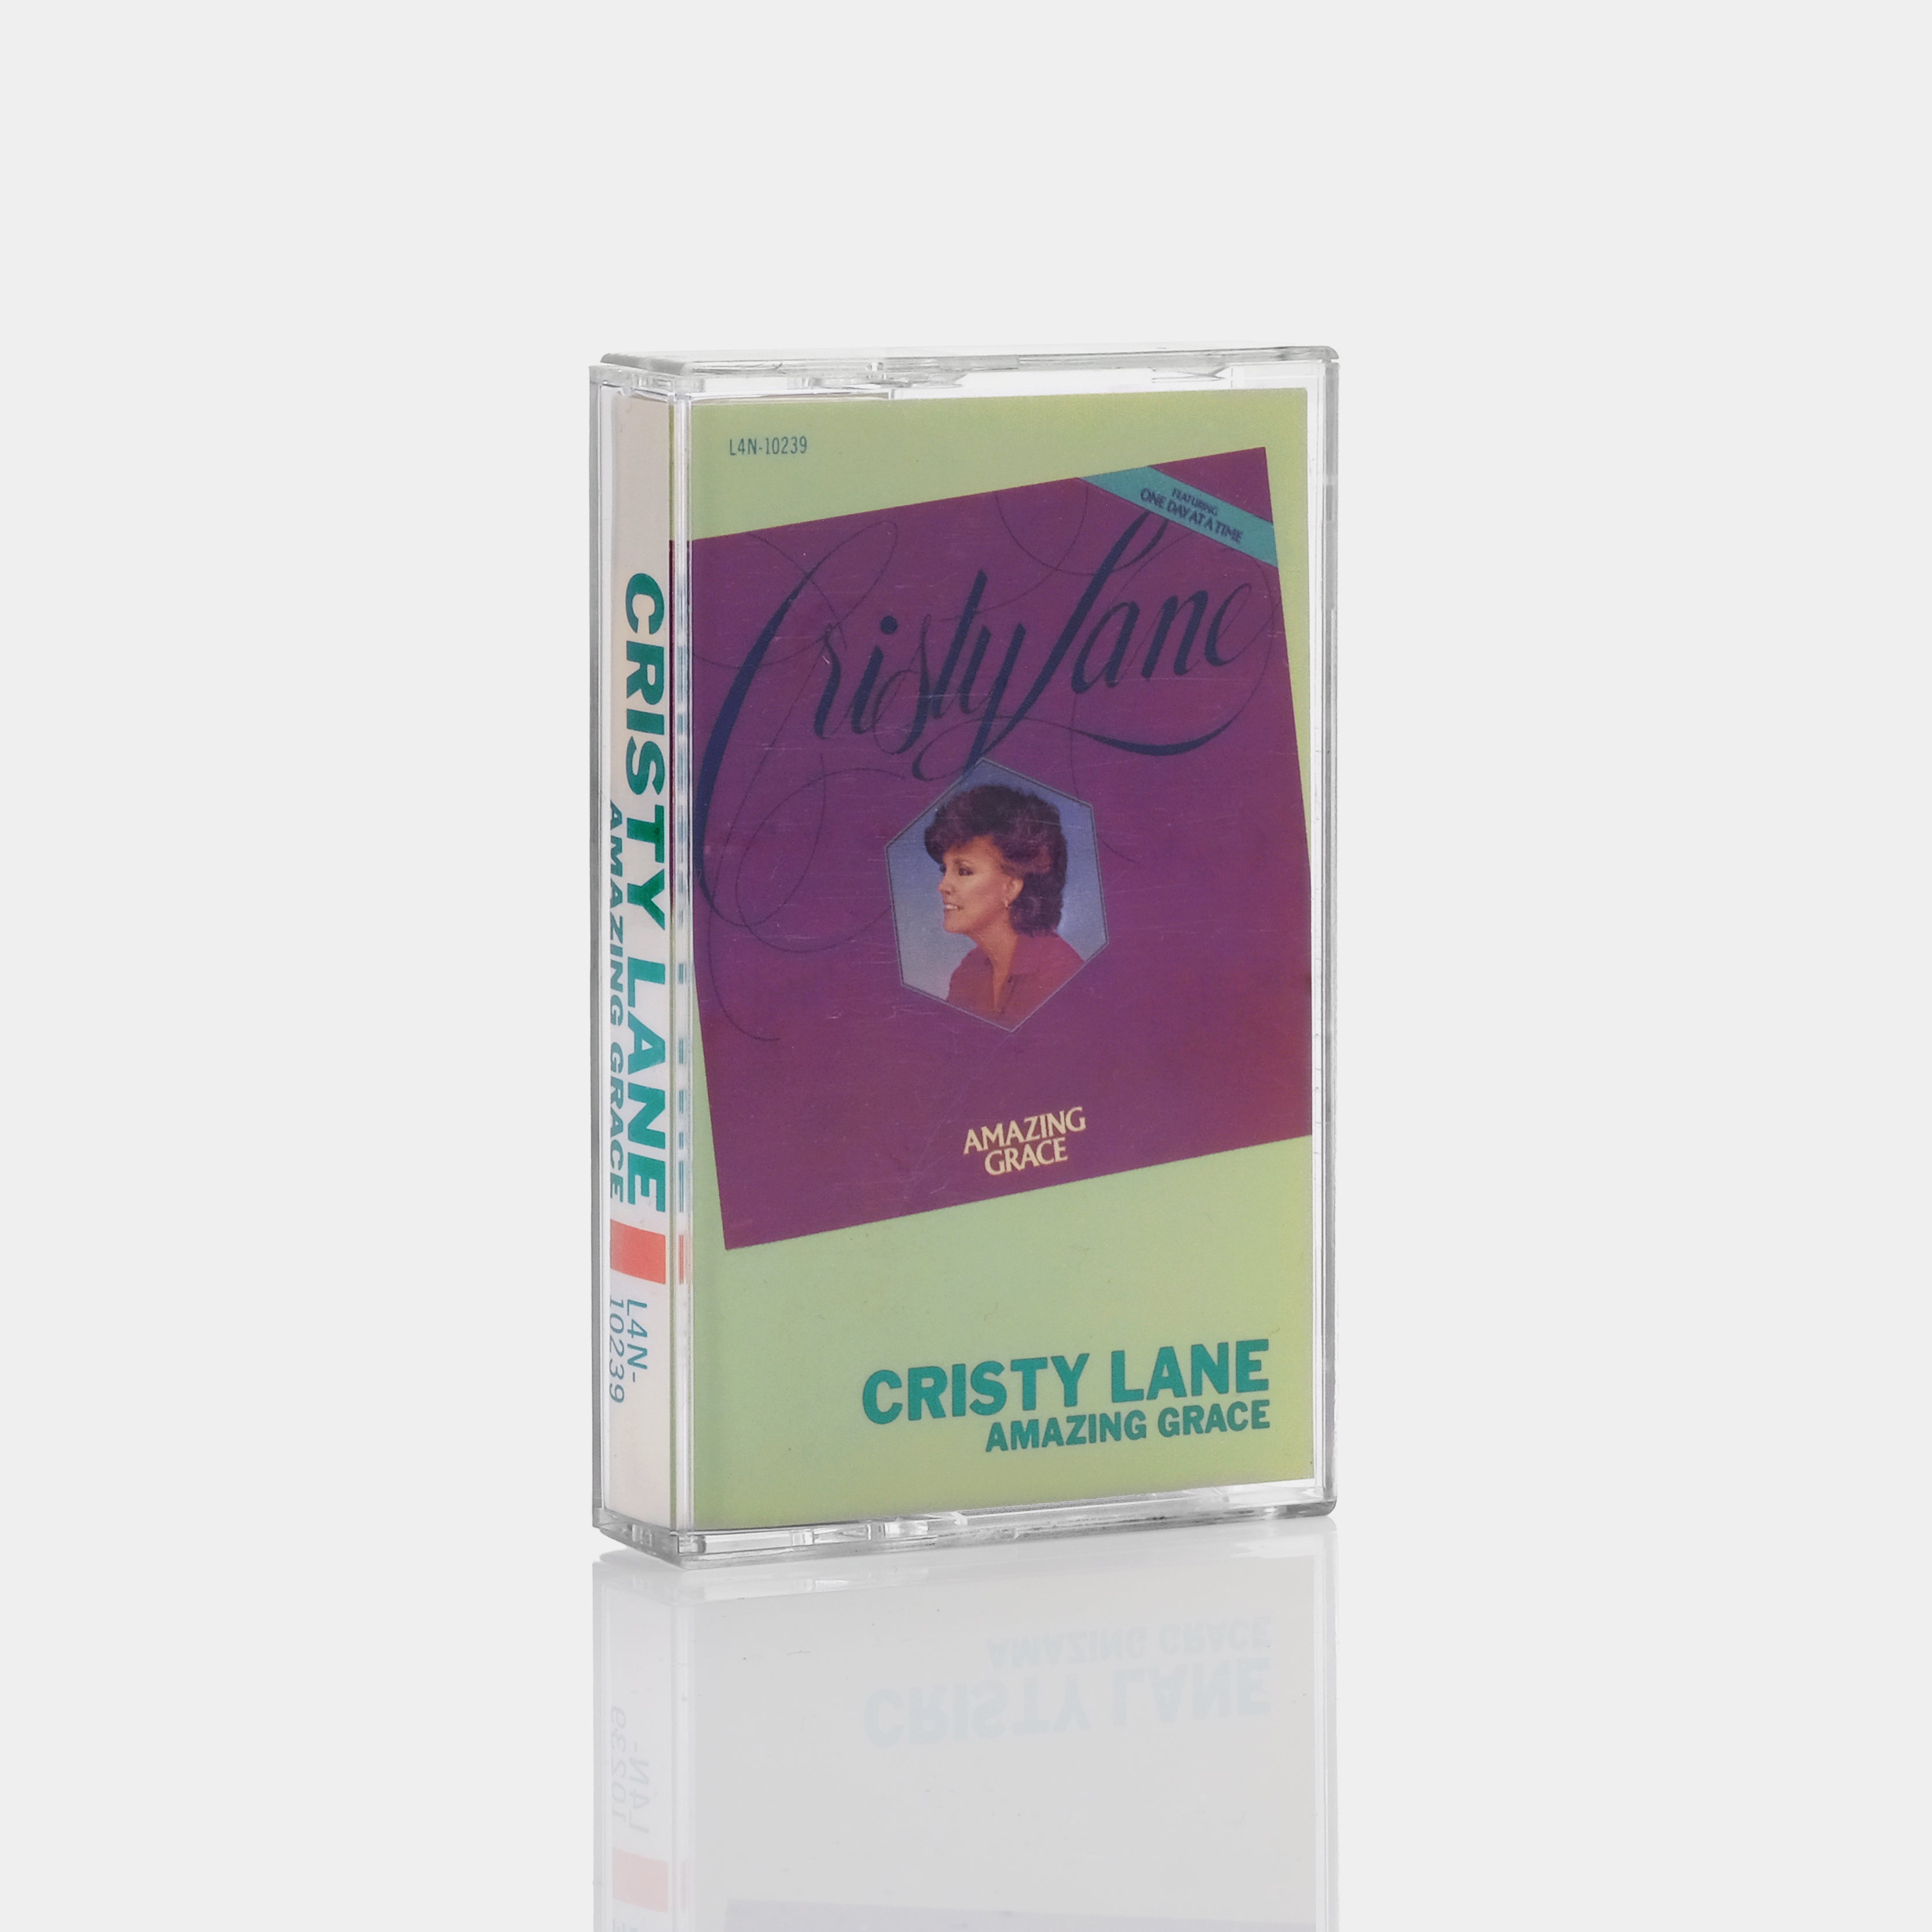 Cristy Lane - Amazing Grace Cassette Tape